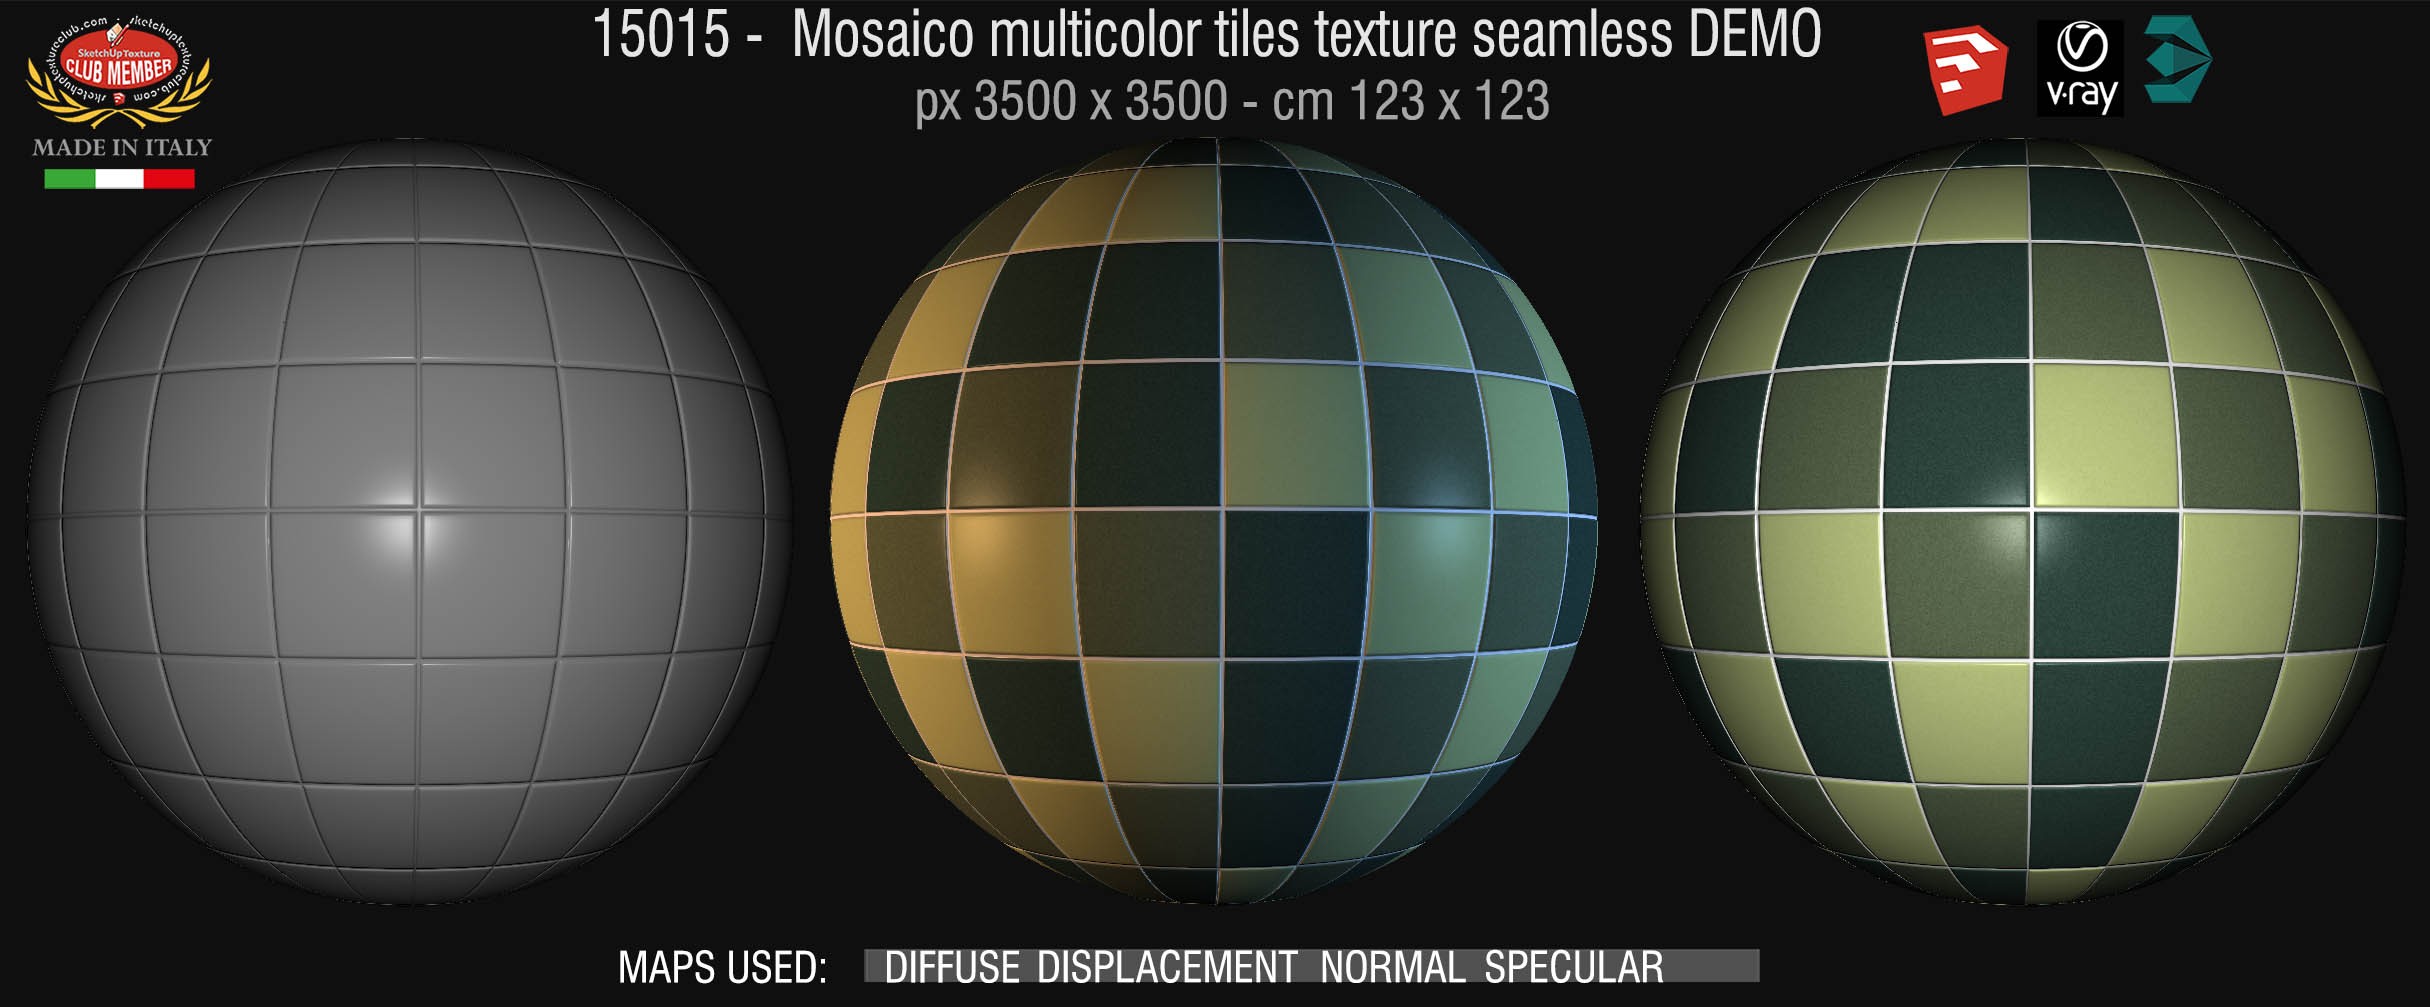 15015 Mosaico multicolor tiles texture seamless + maps DEMO